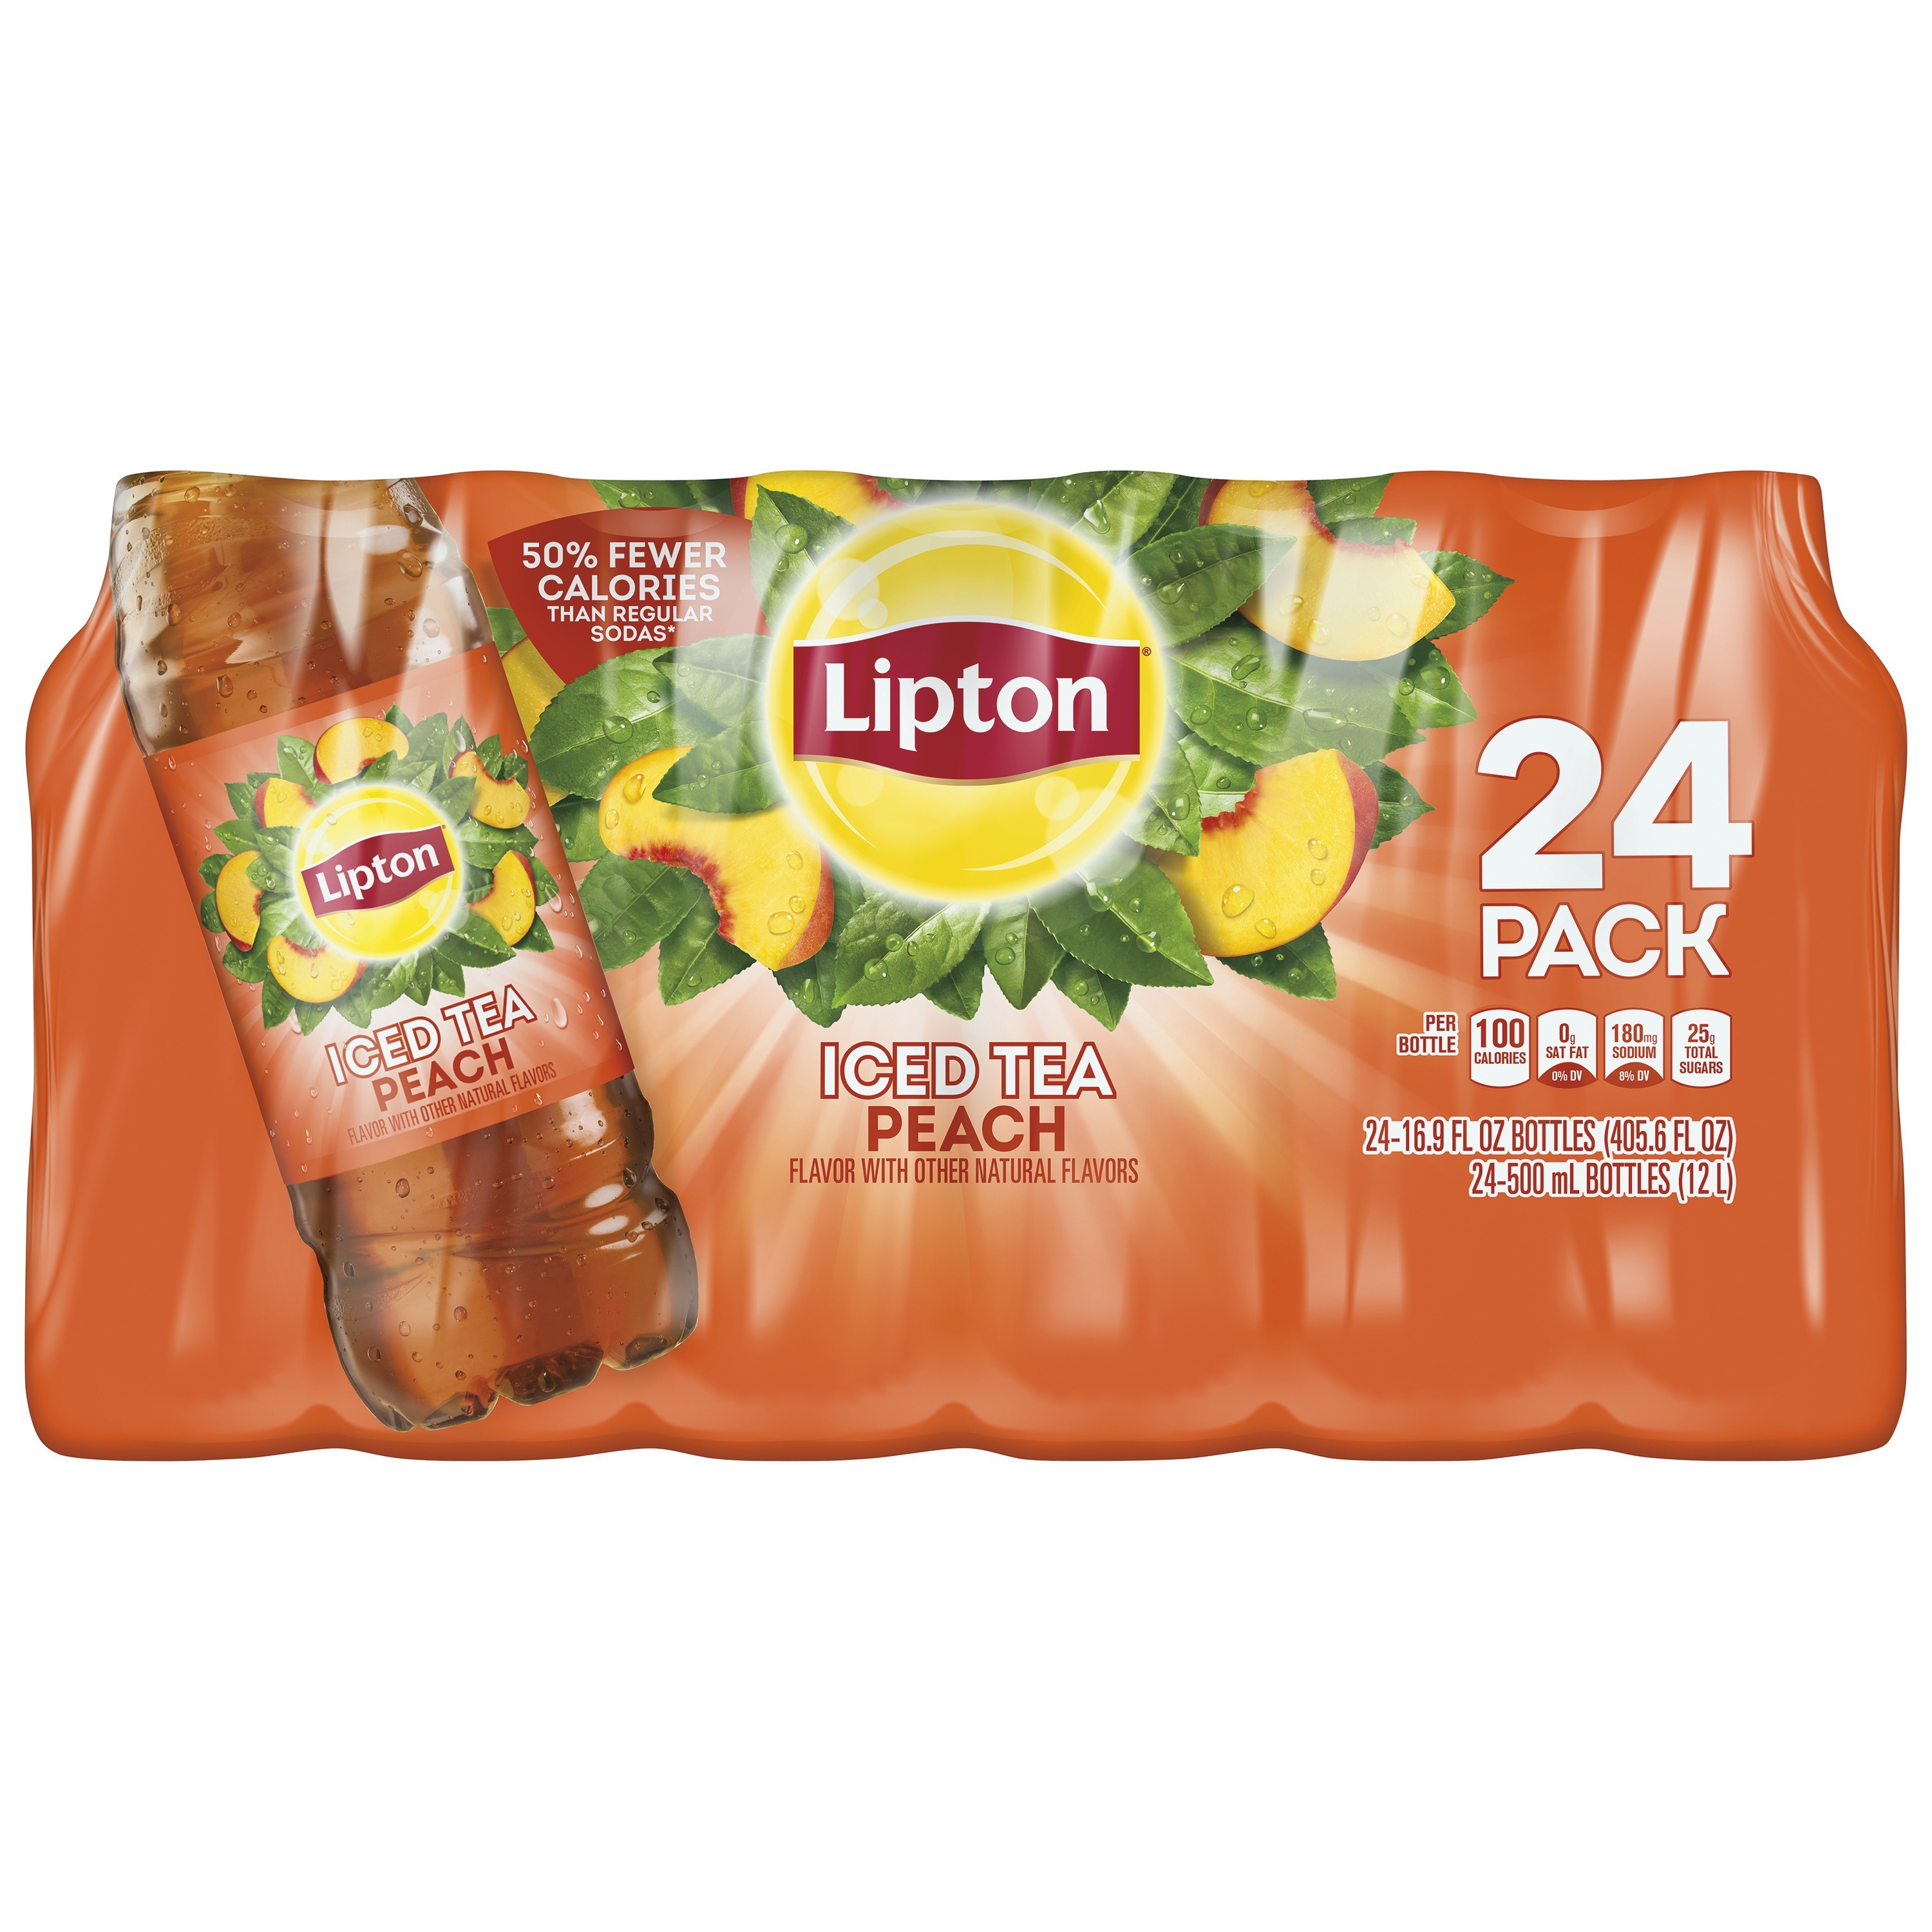 Lipton, Peach Flavor, Iced Tea - SmartLabel™